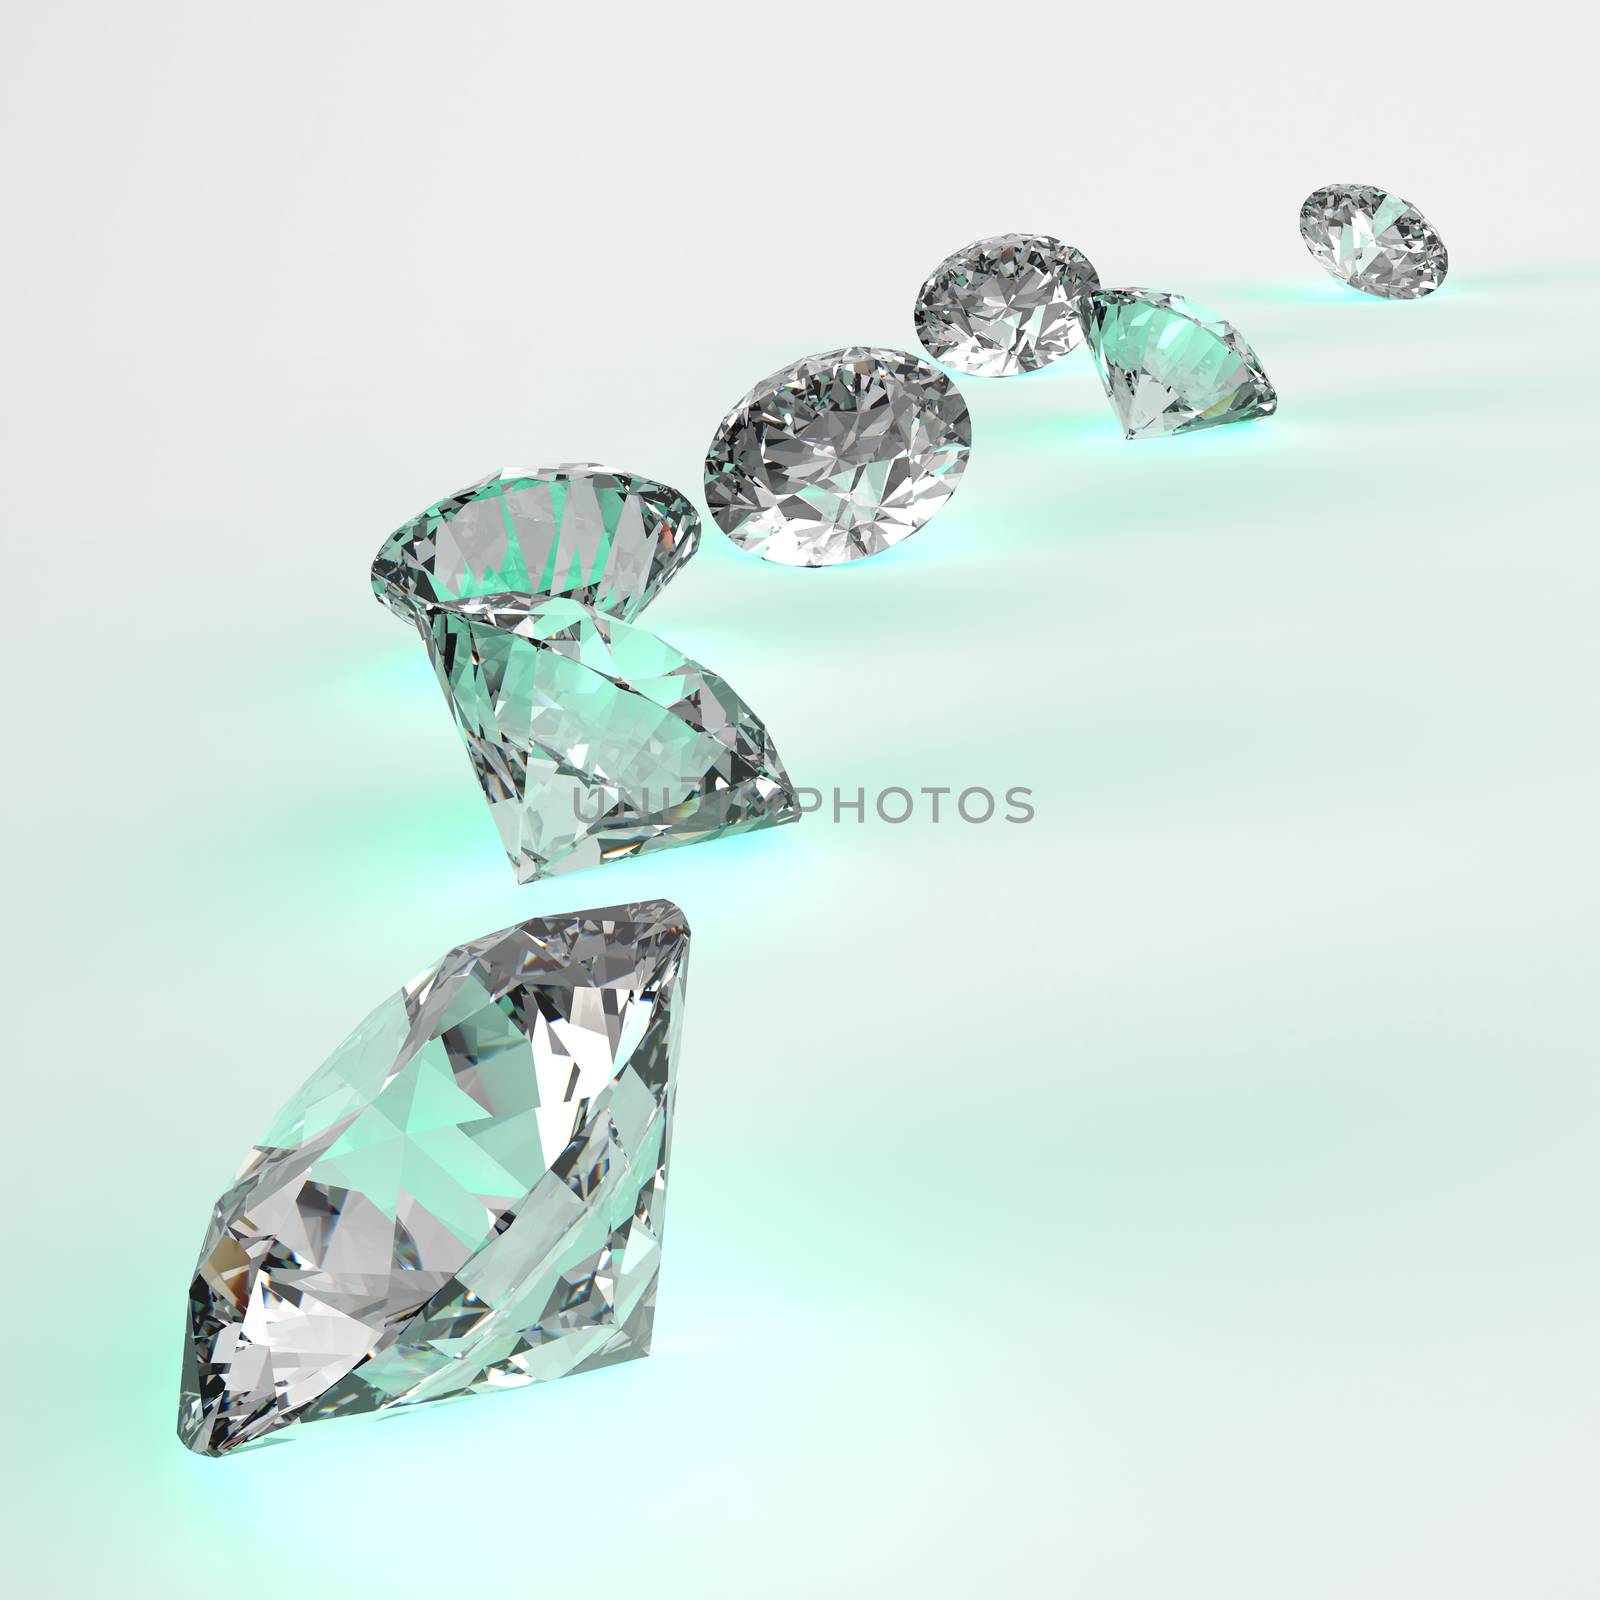 Diamonds 3d in composition as concept